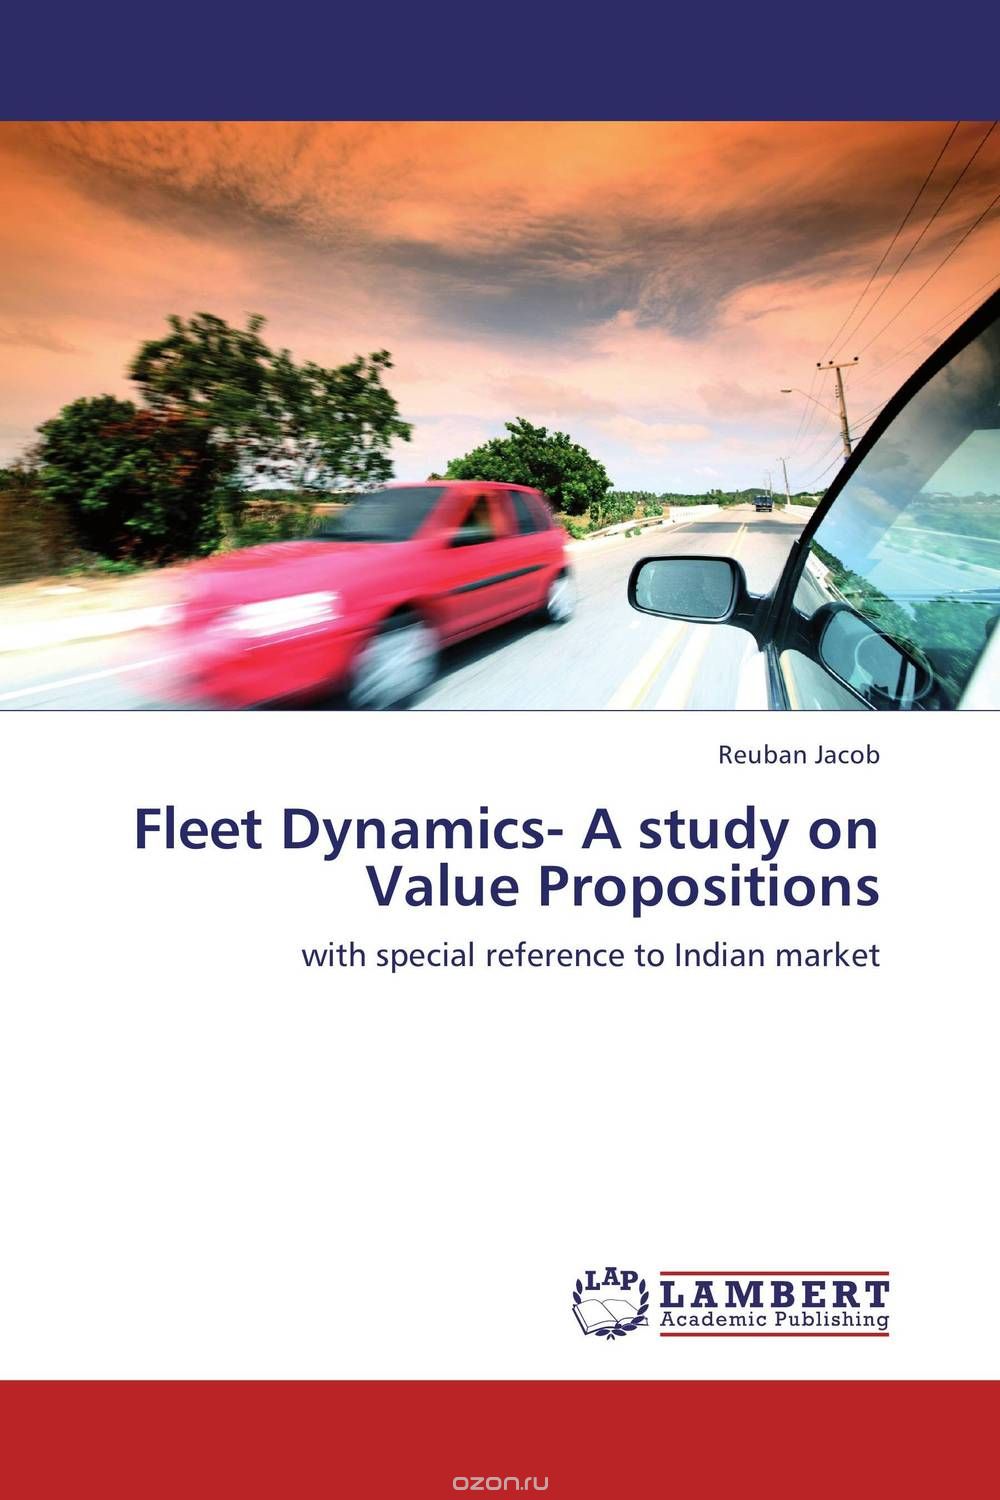 Fleet Dynamics- A study on Value Propositions